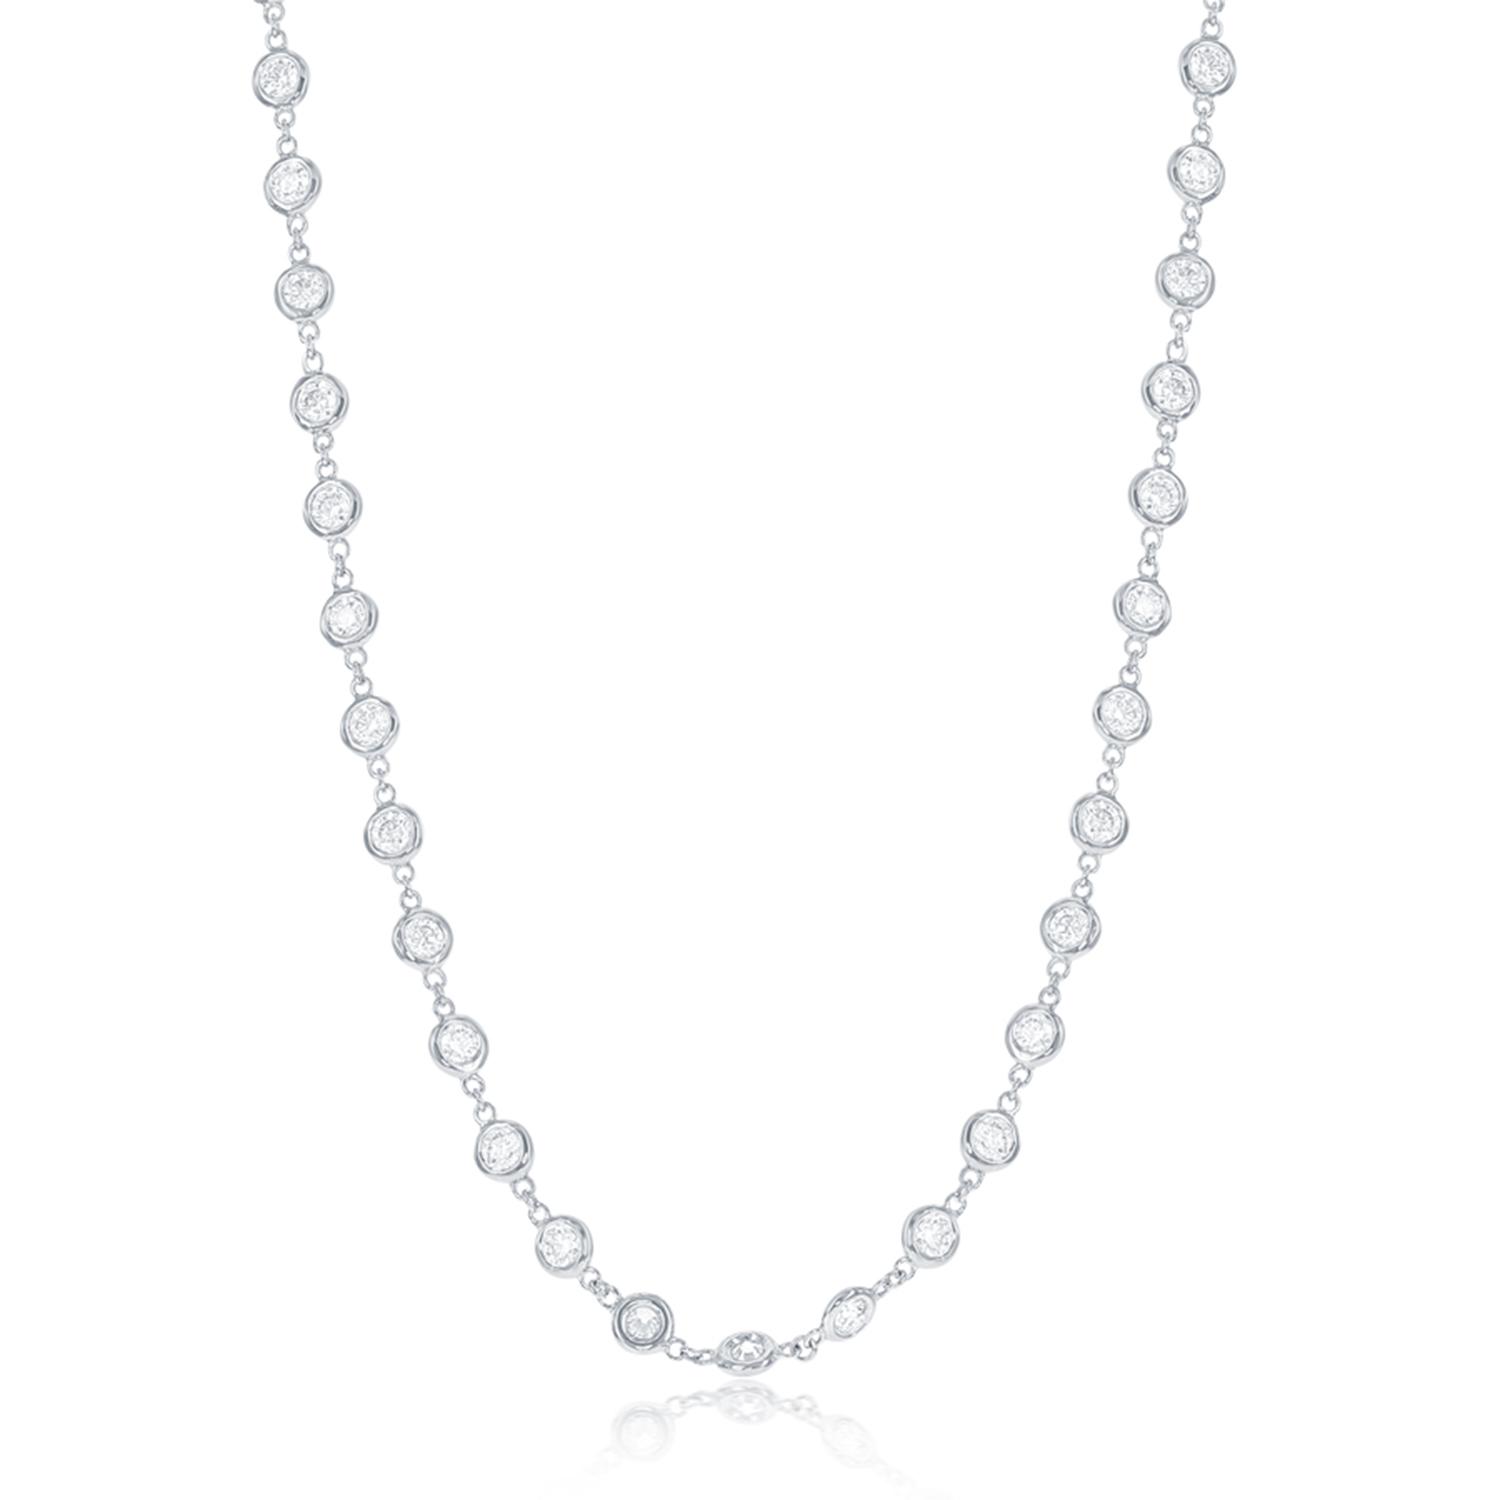 White Gold 15.13 Carat Round Diamond Necklace